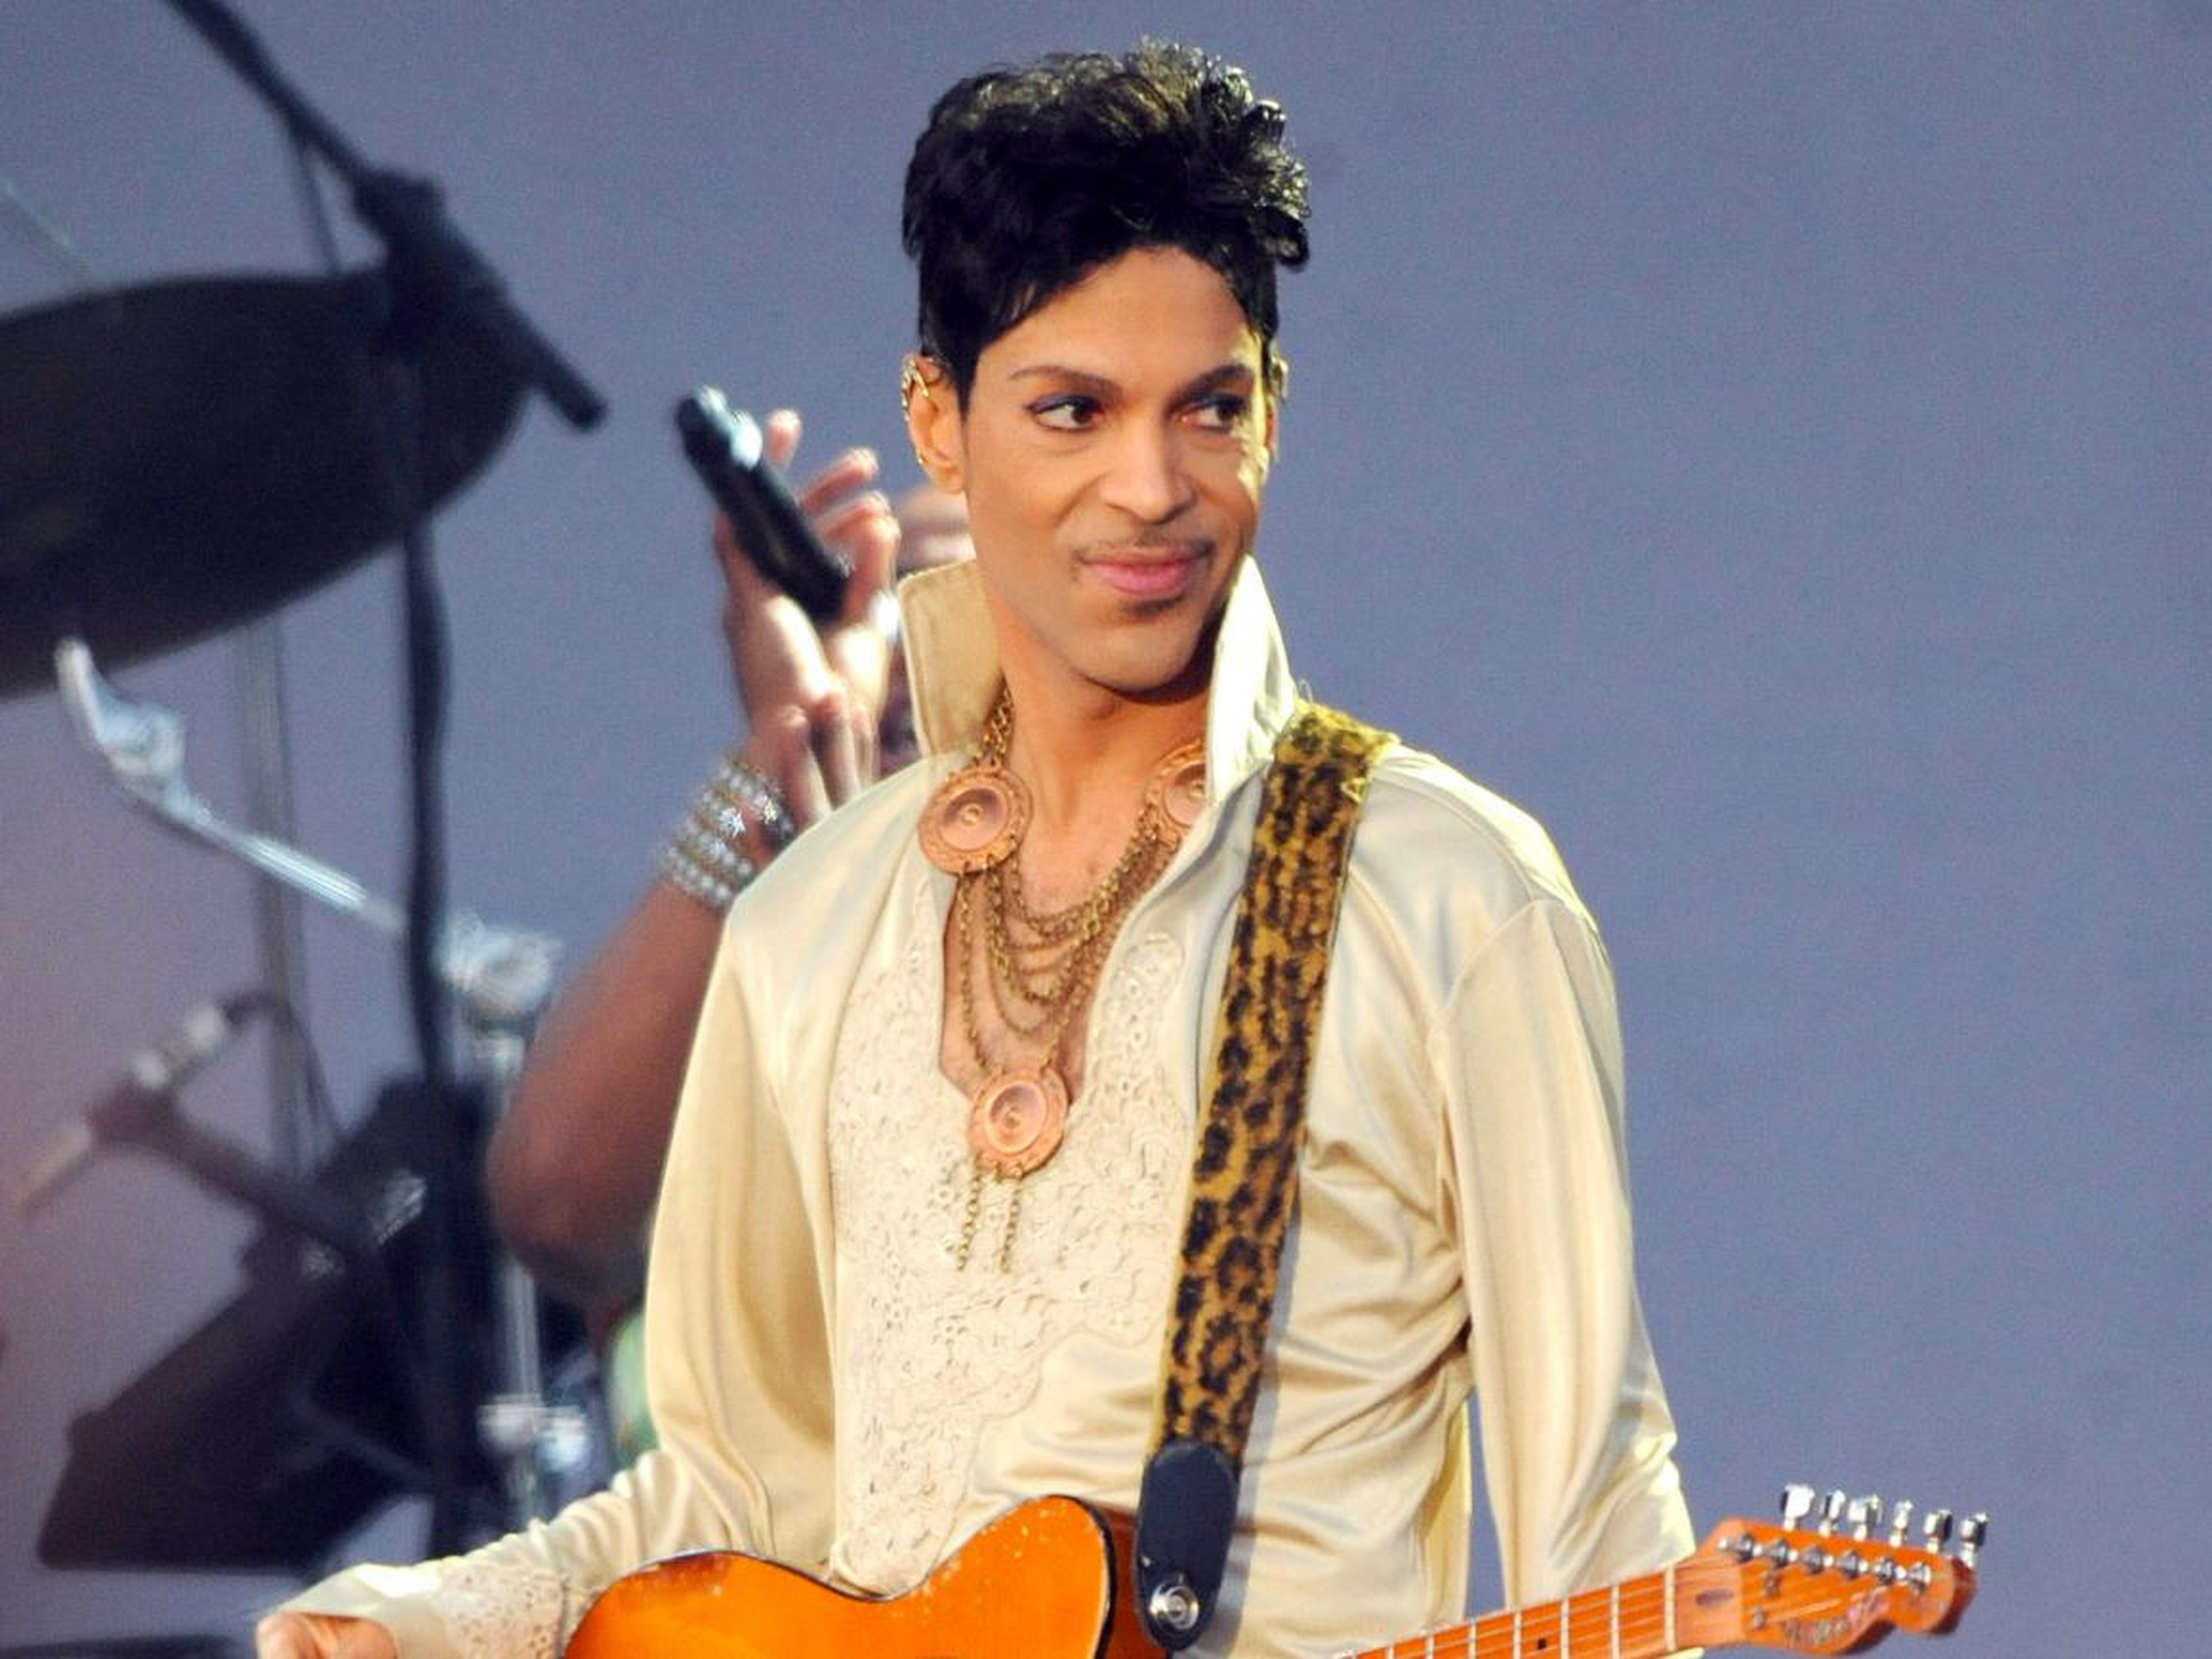 9. Prince — $13 million